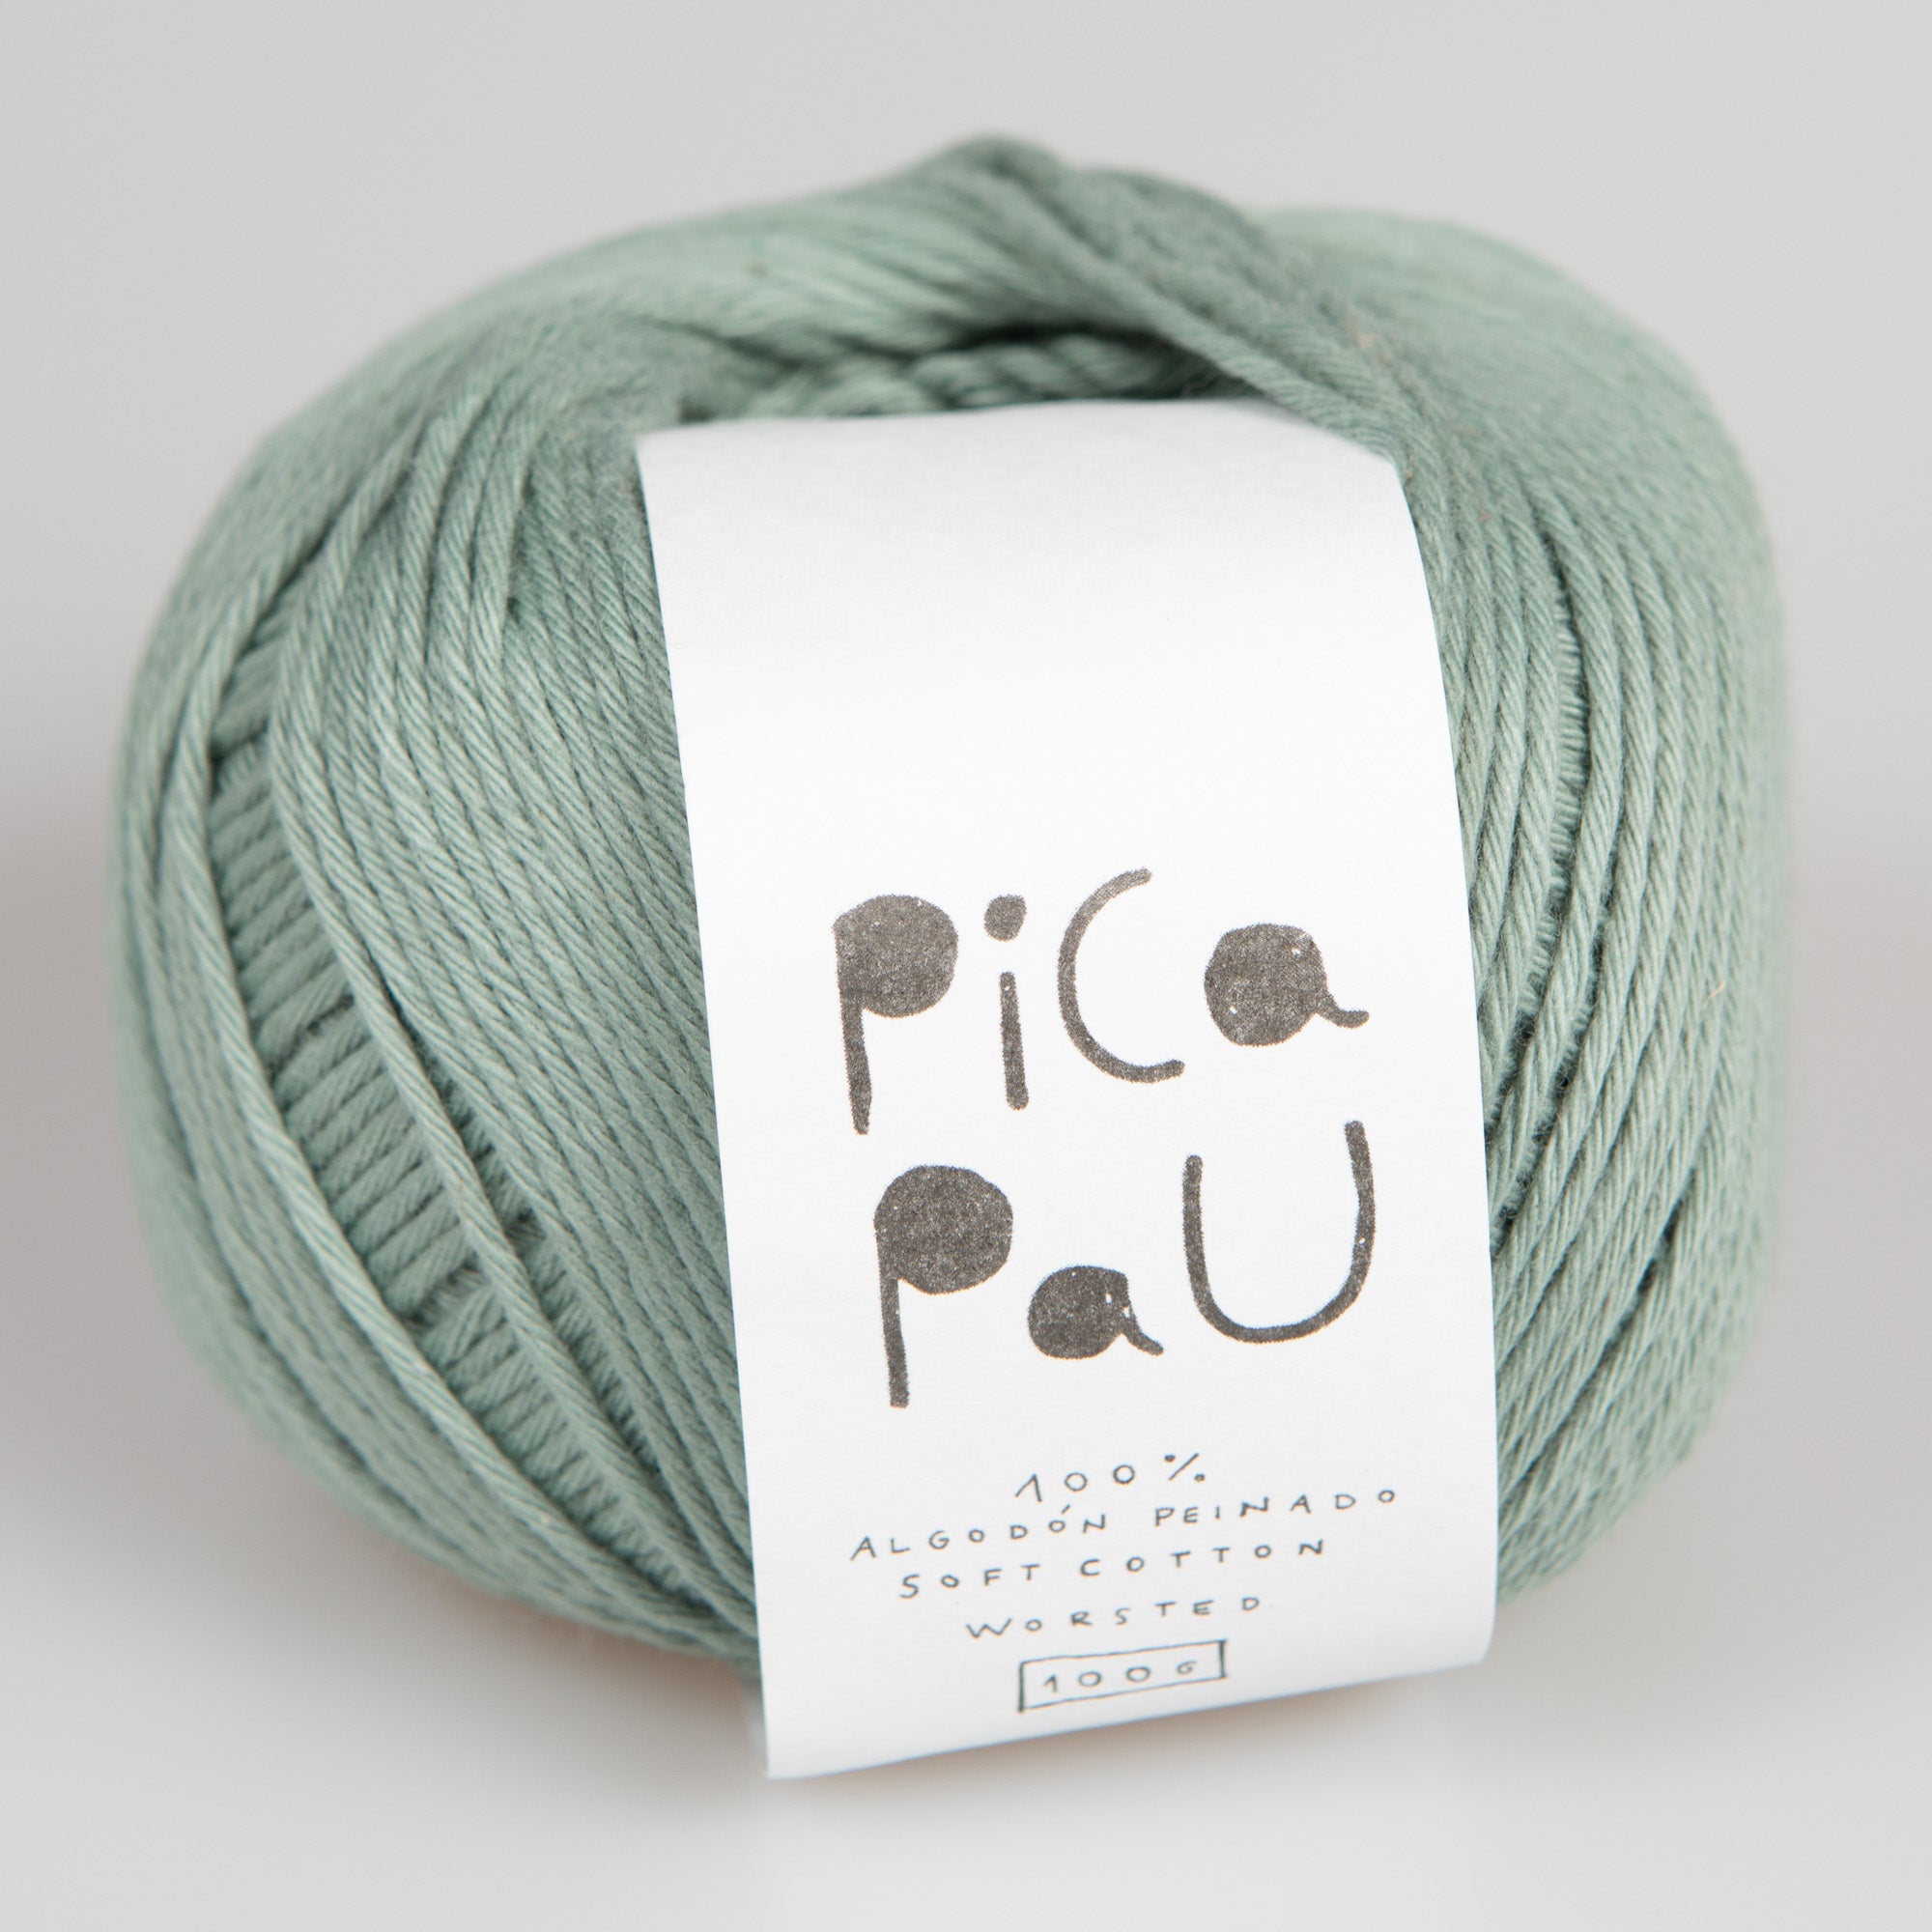 Pica Pau Cotton Yarn / 100g Worsted